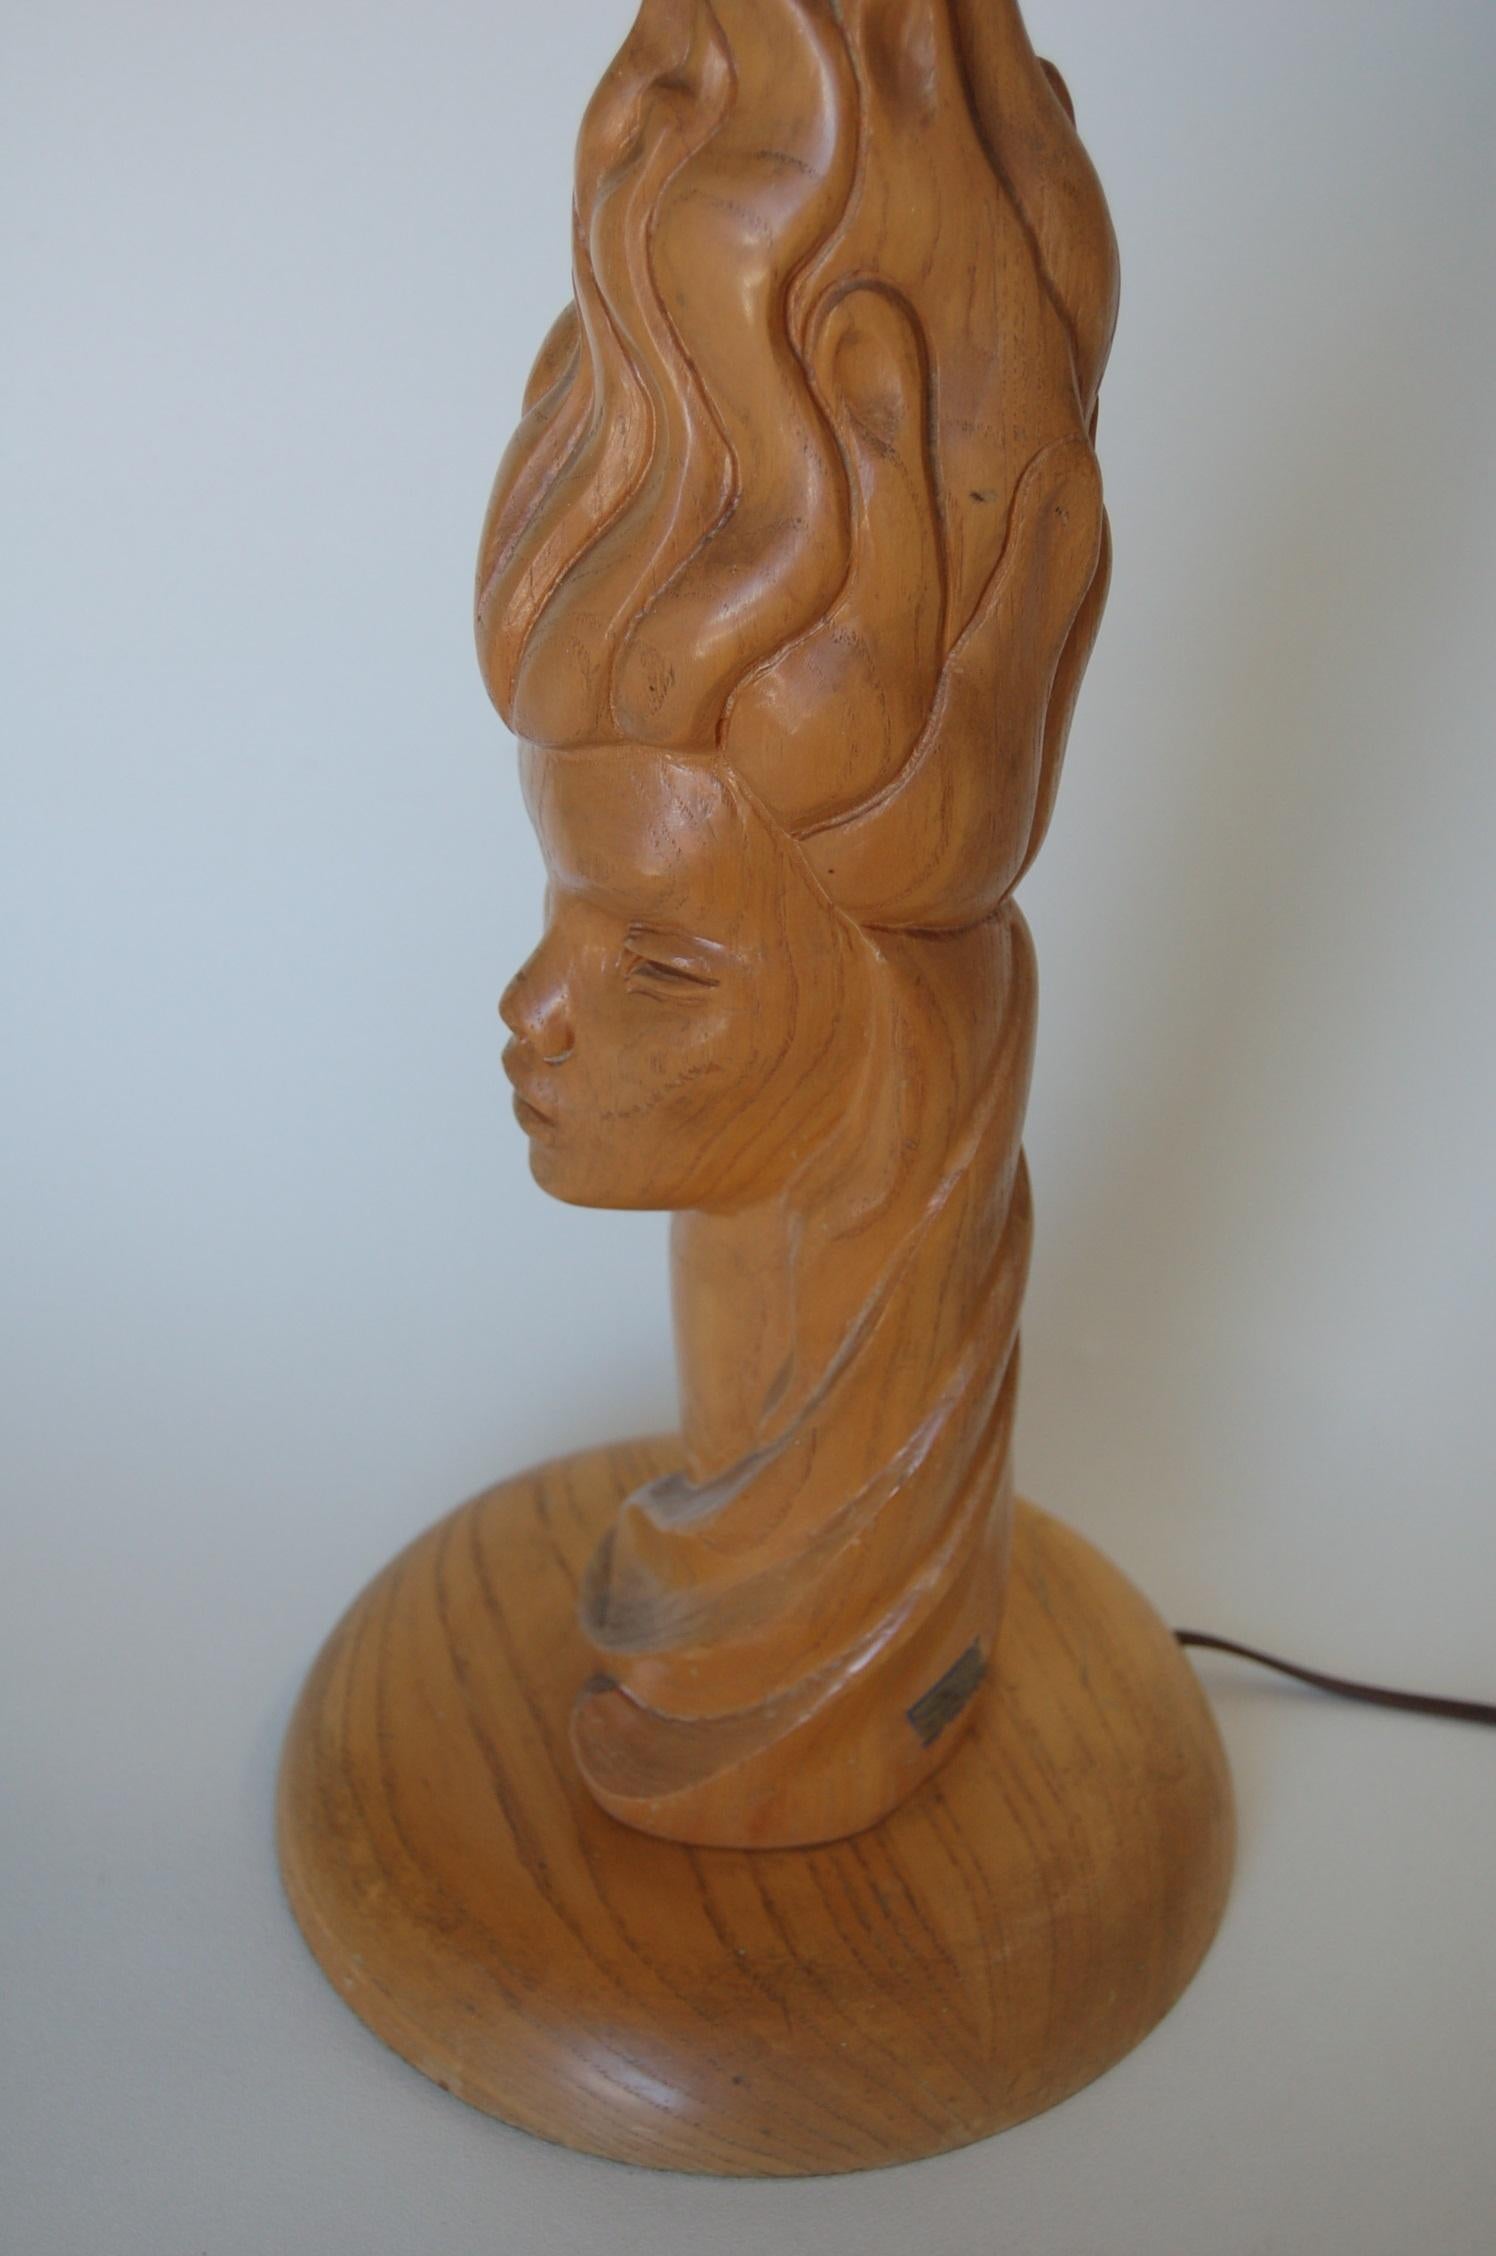 Midcentury carved oak exotic female table lamp in style of Jascha Heifetz. Measures 4.5